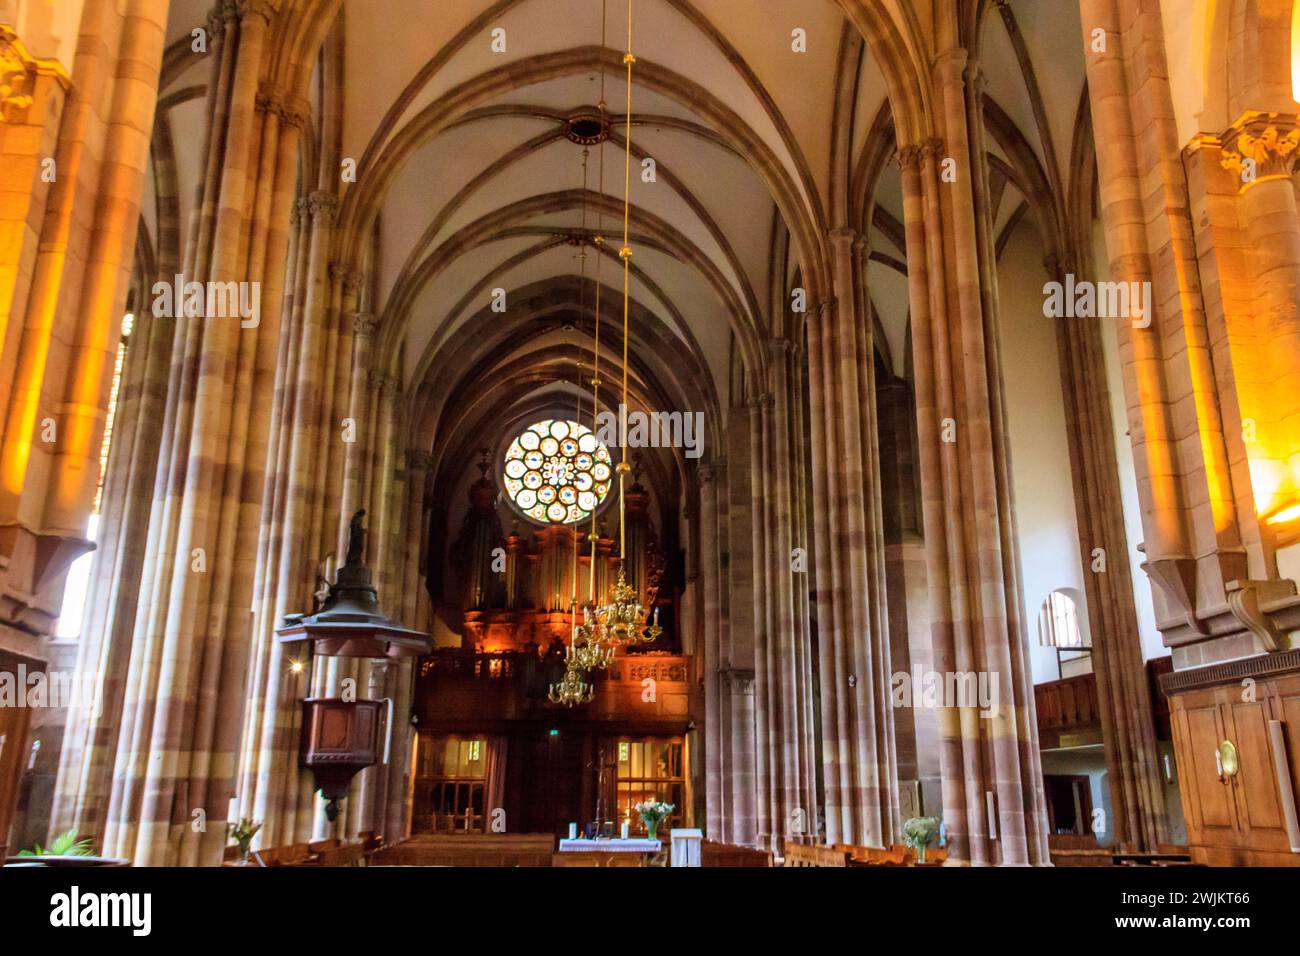 Interior of St. Thomas church in Strasbourg, France Stock Photo